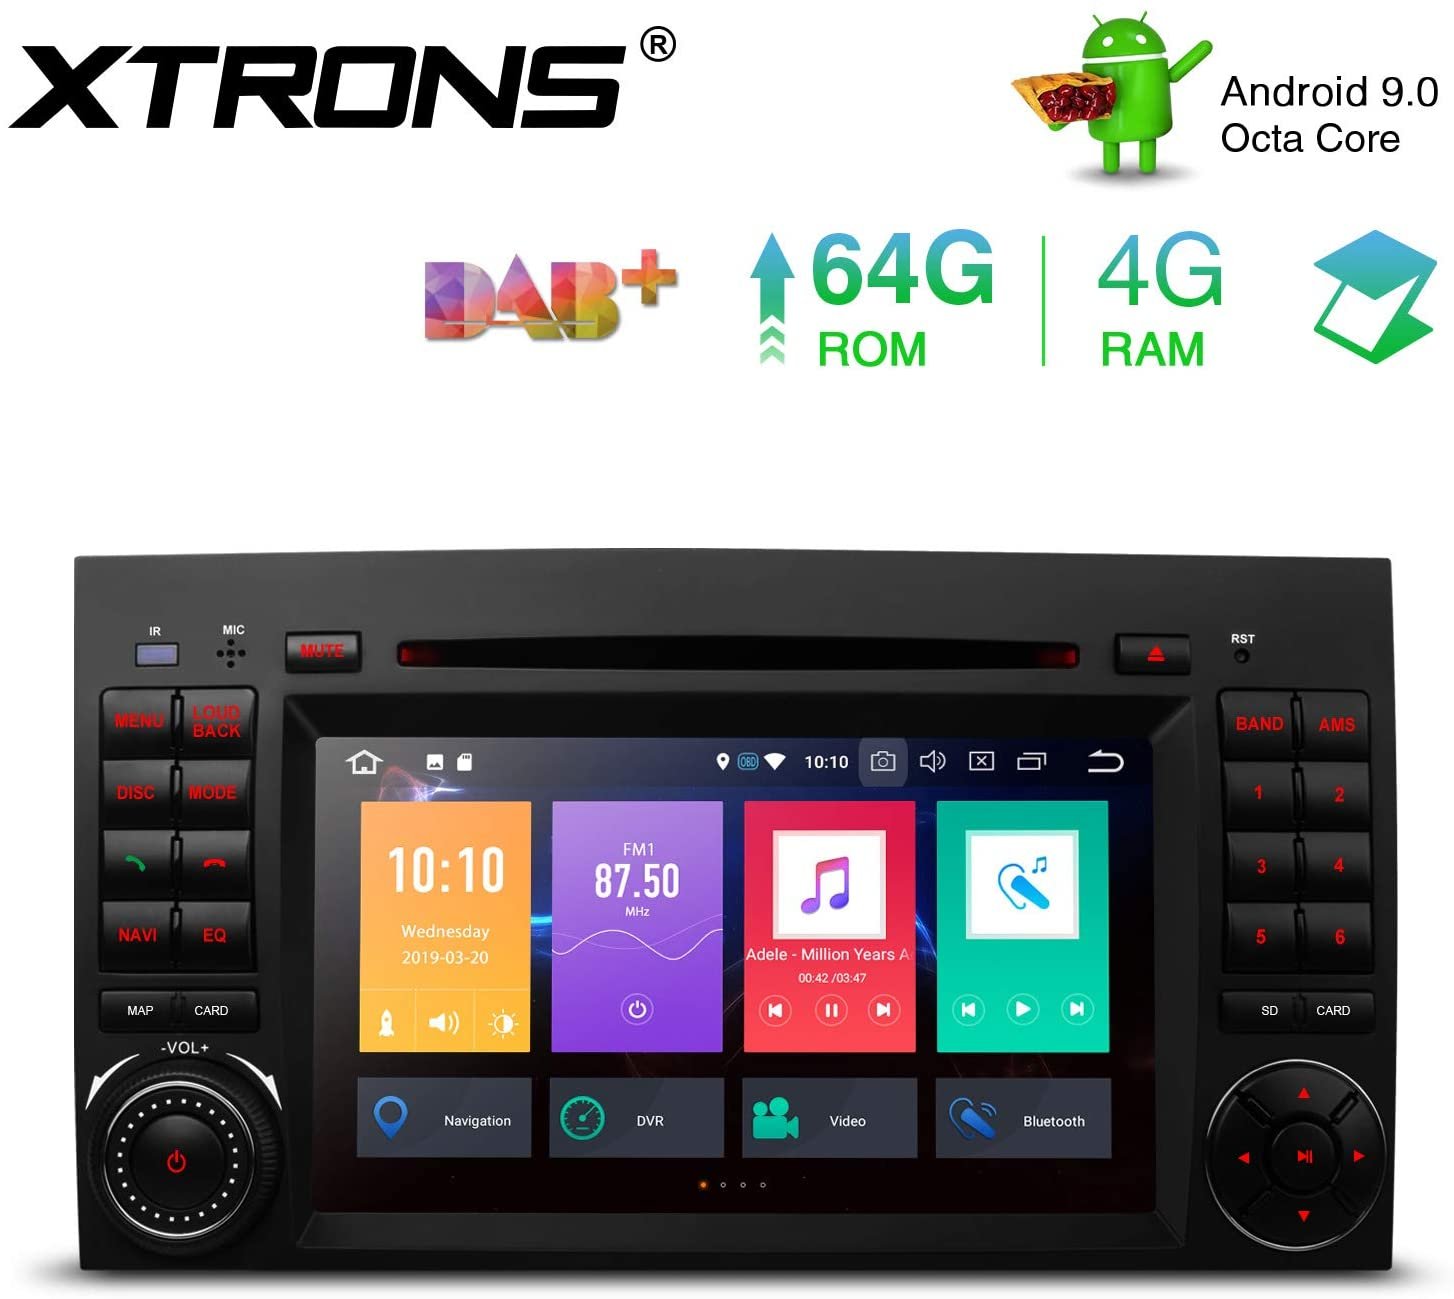 Xtrons-Android-Radio.jpg